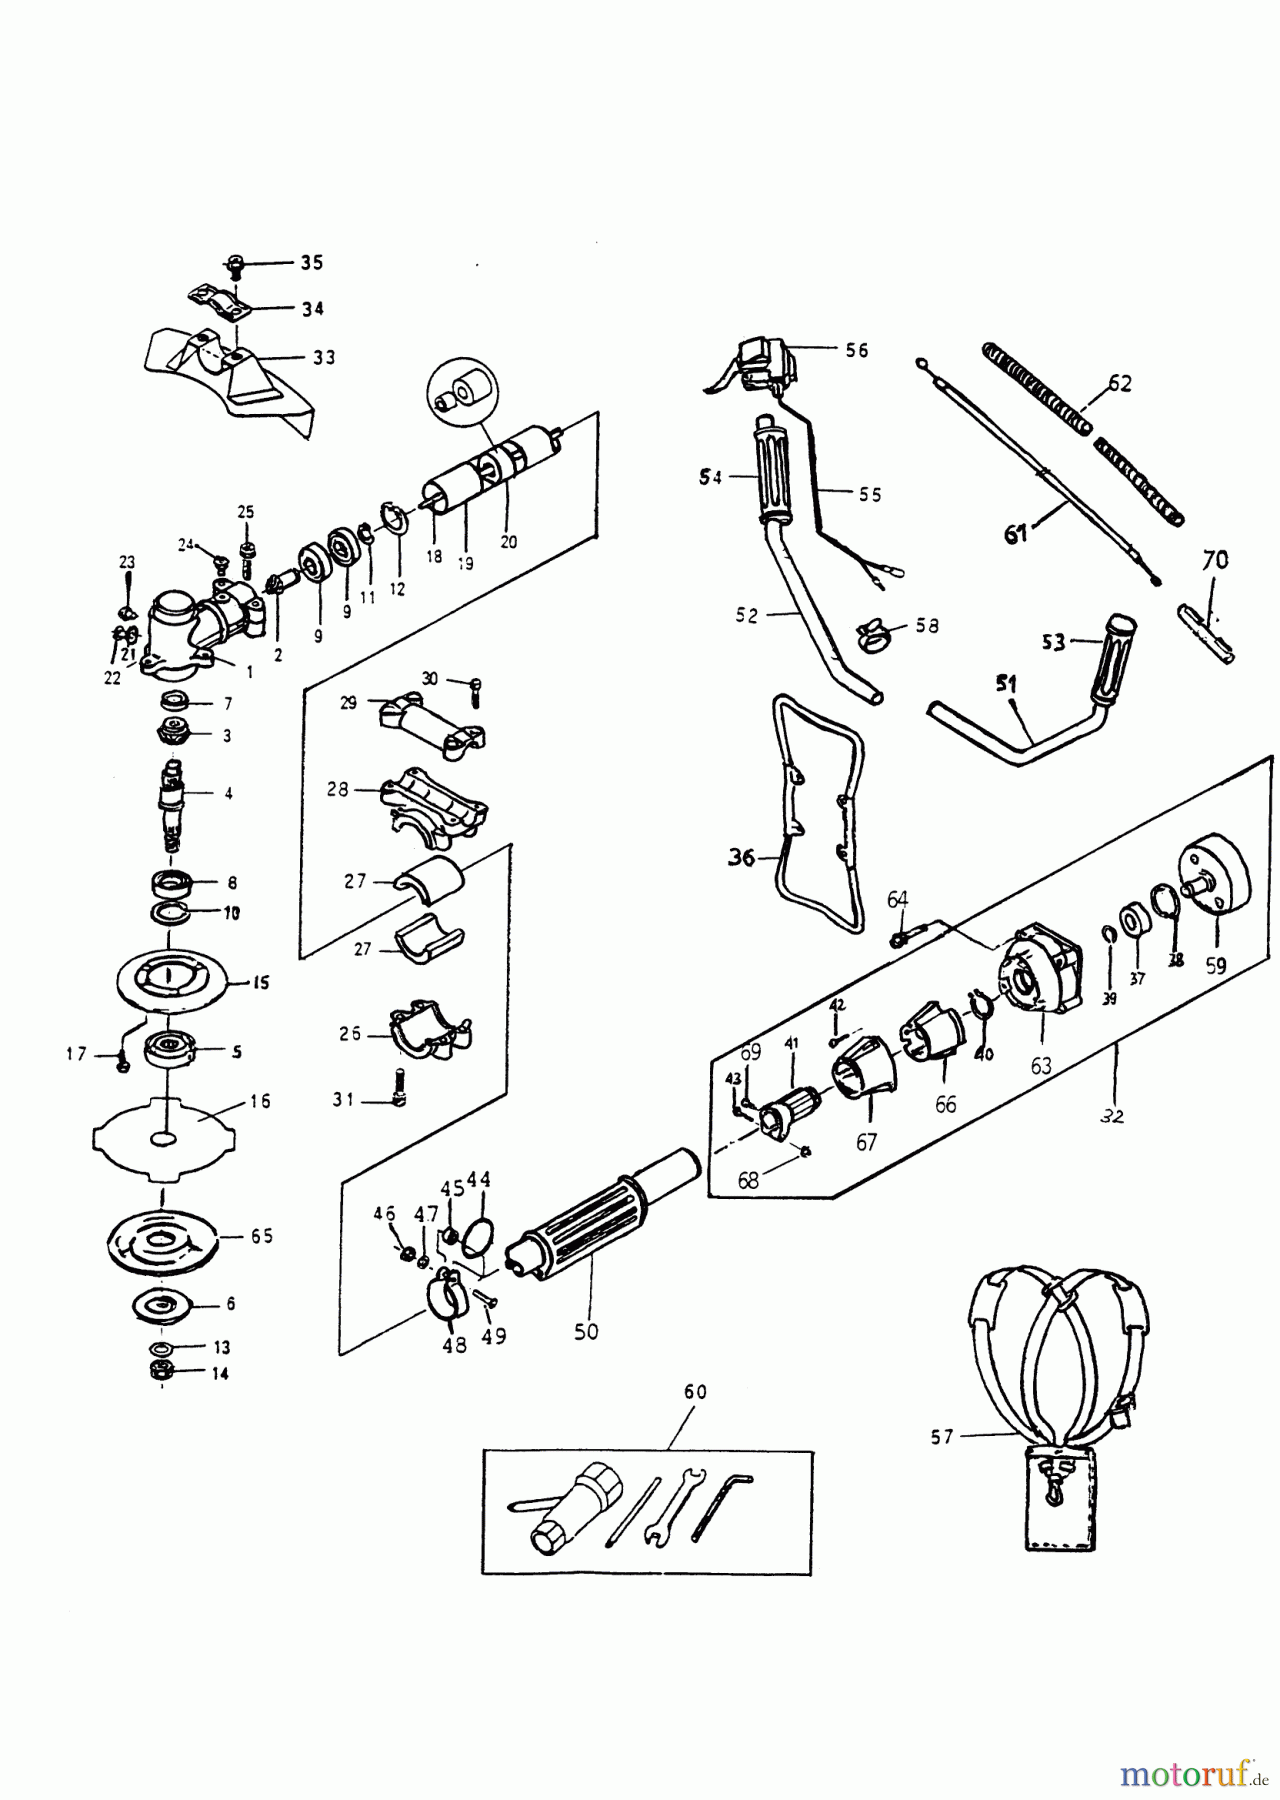  AL-KO Gartentechnik Motorsensen BC 330 T Seite 1